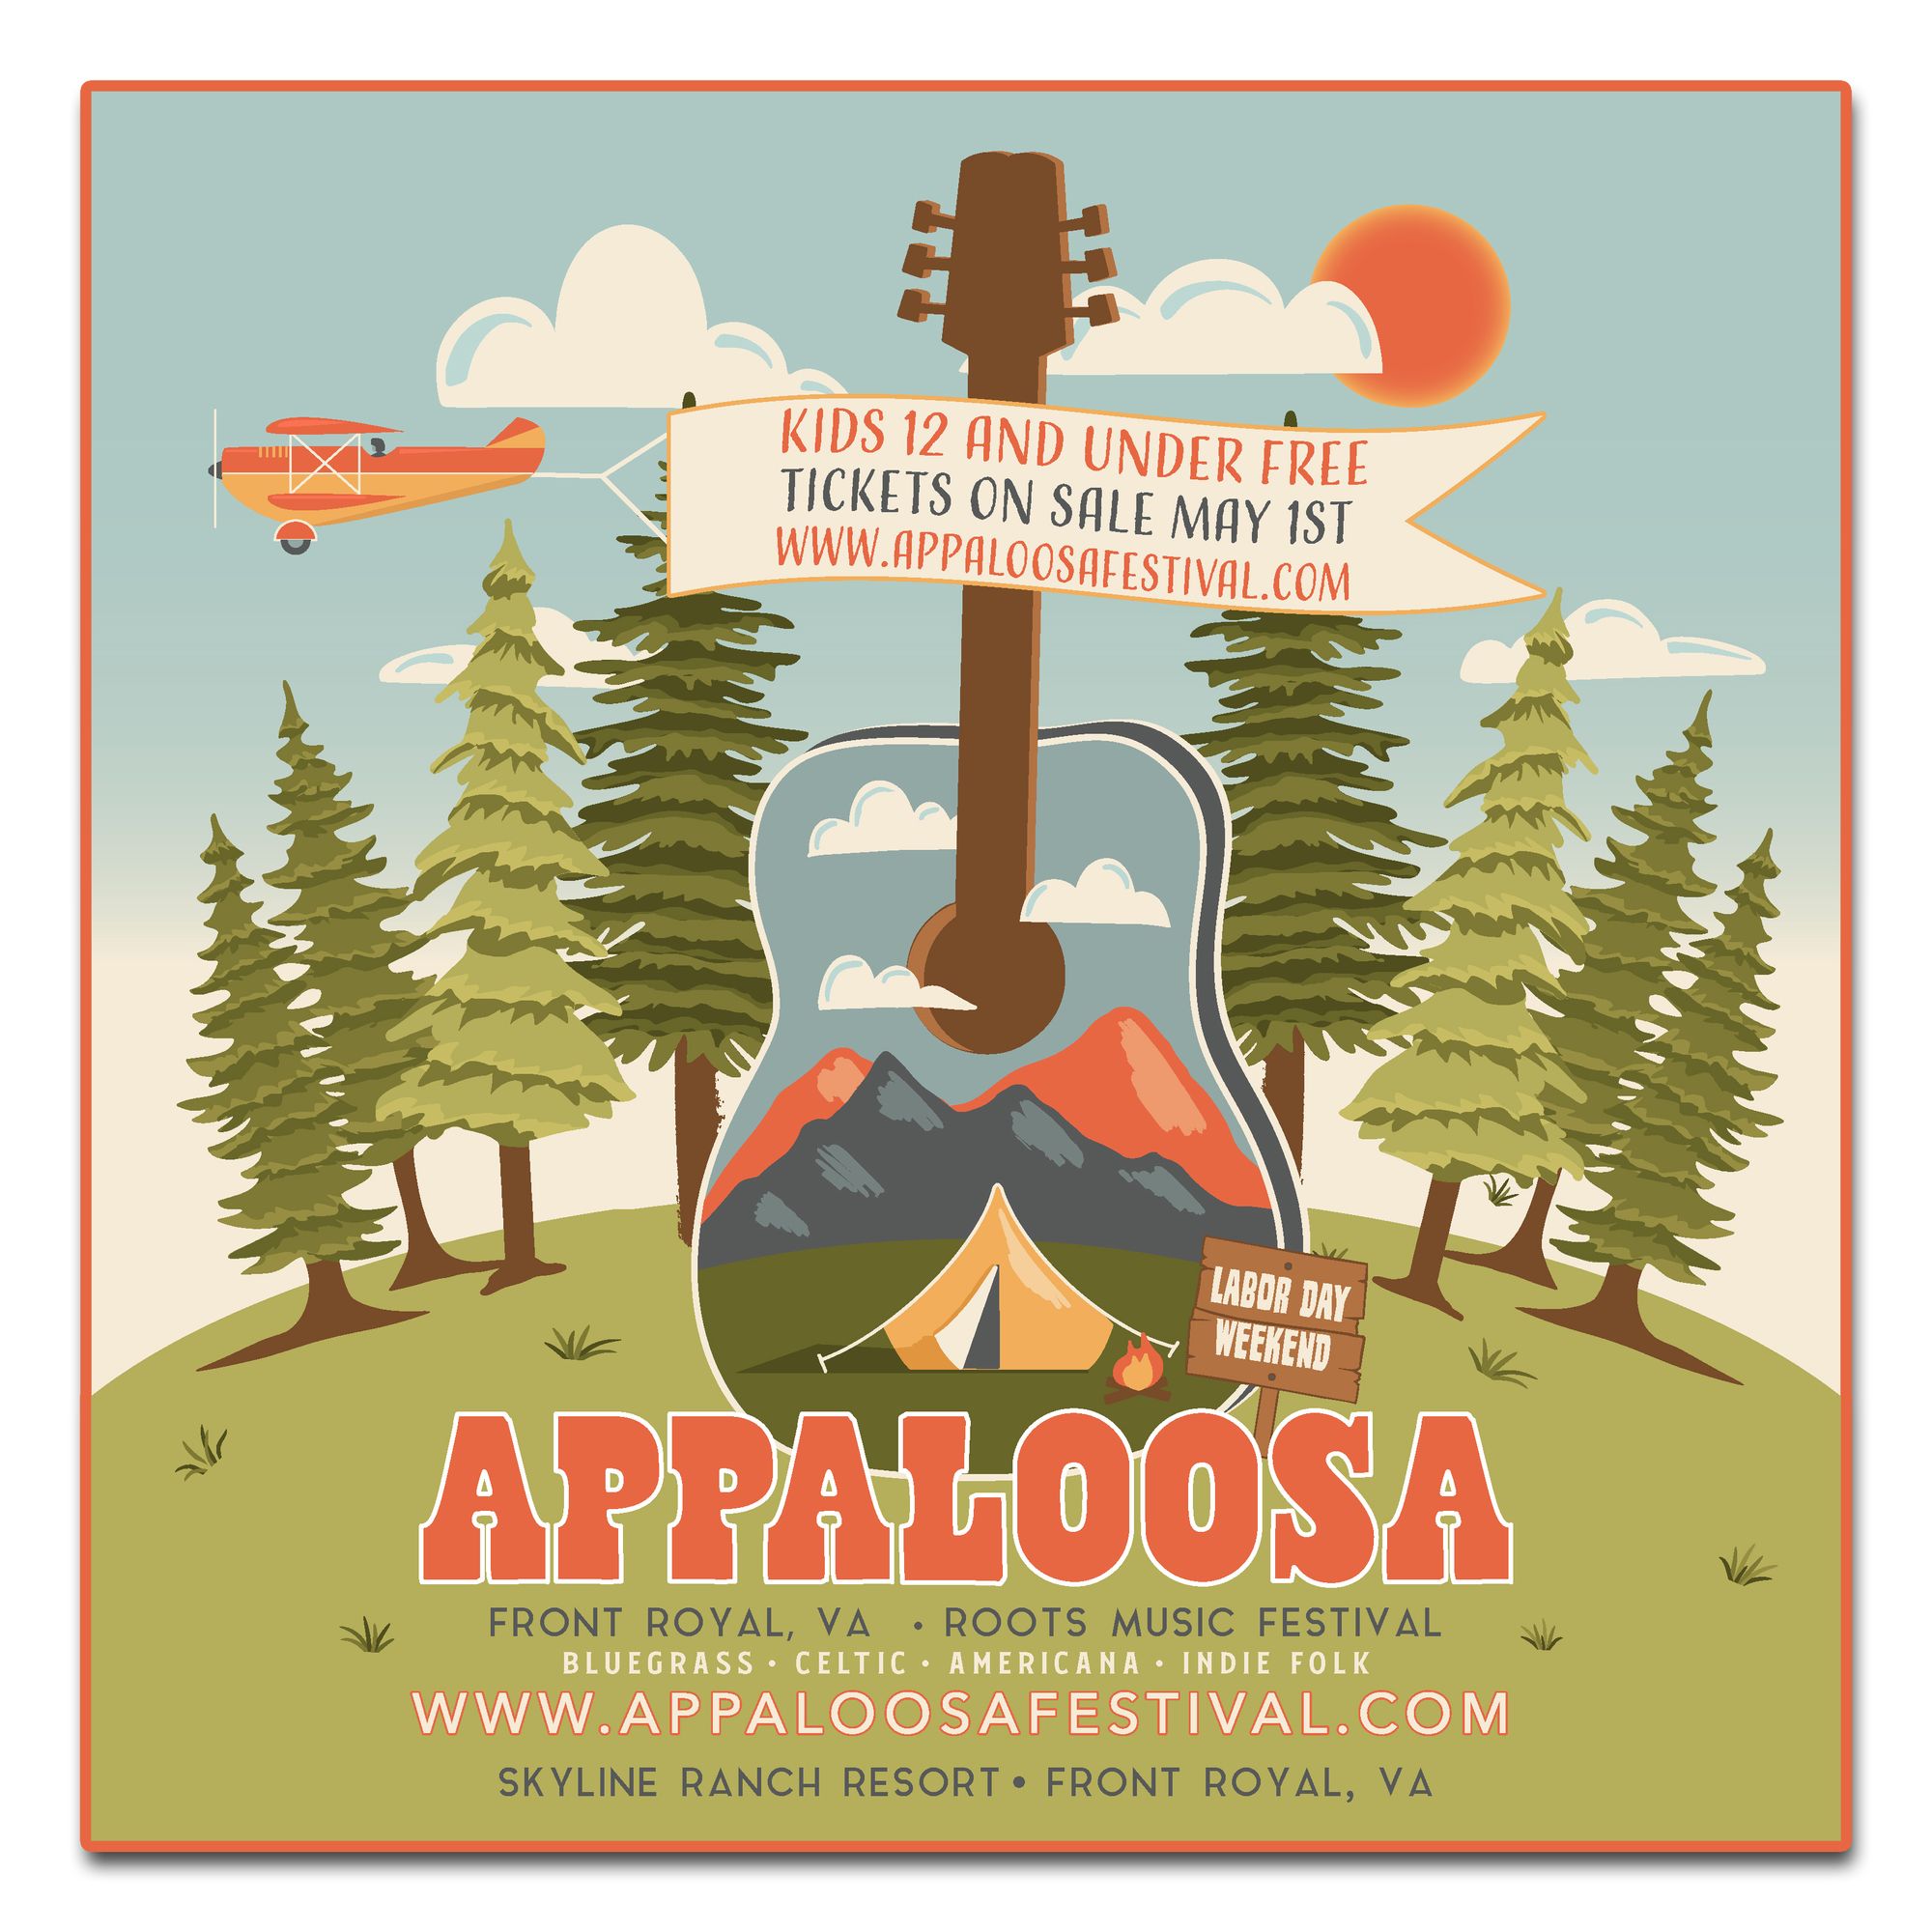 Appaloosa Festival Tickets